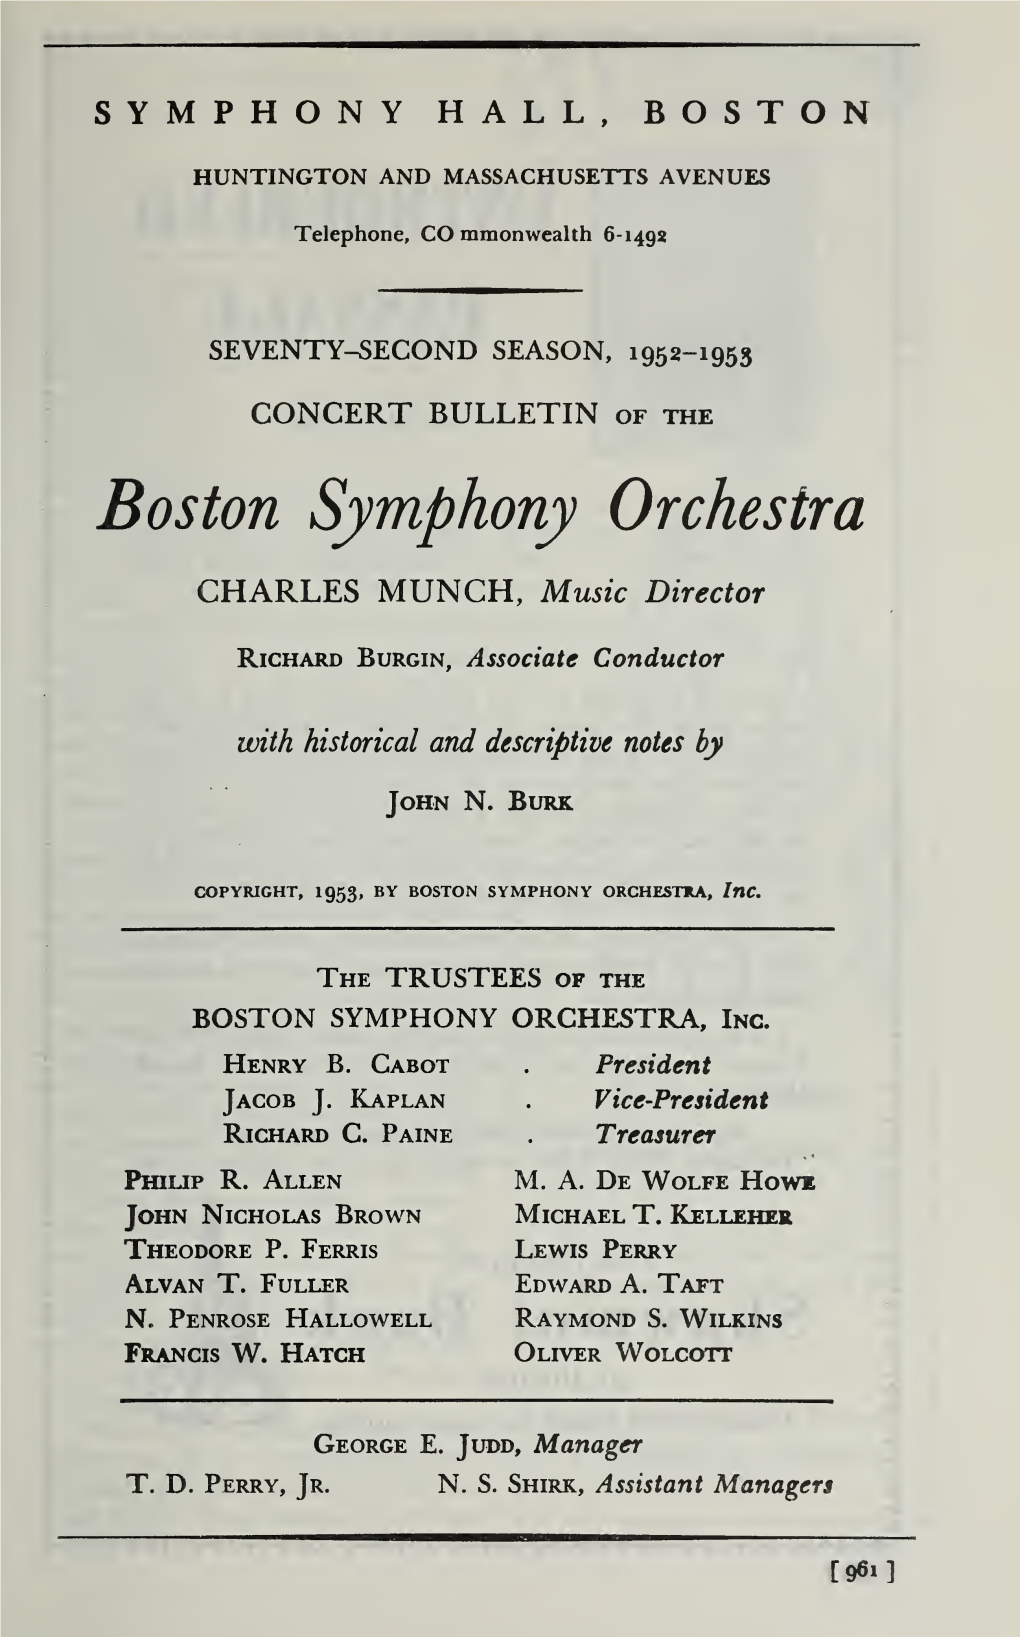 Boston Symphony Orchestra Concert Programs, Season 72, 1952-1953